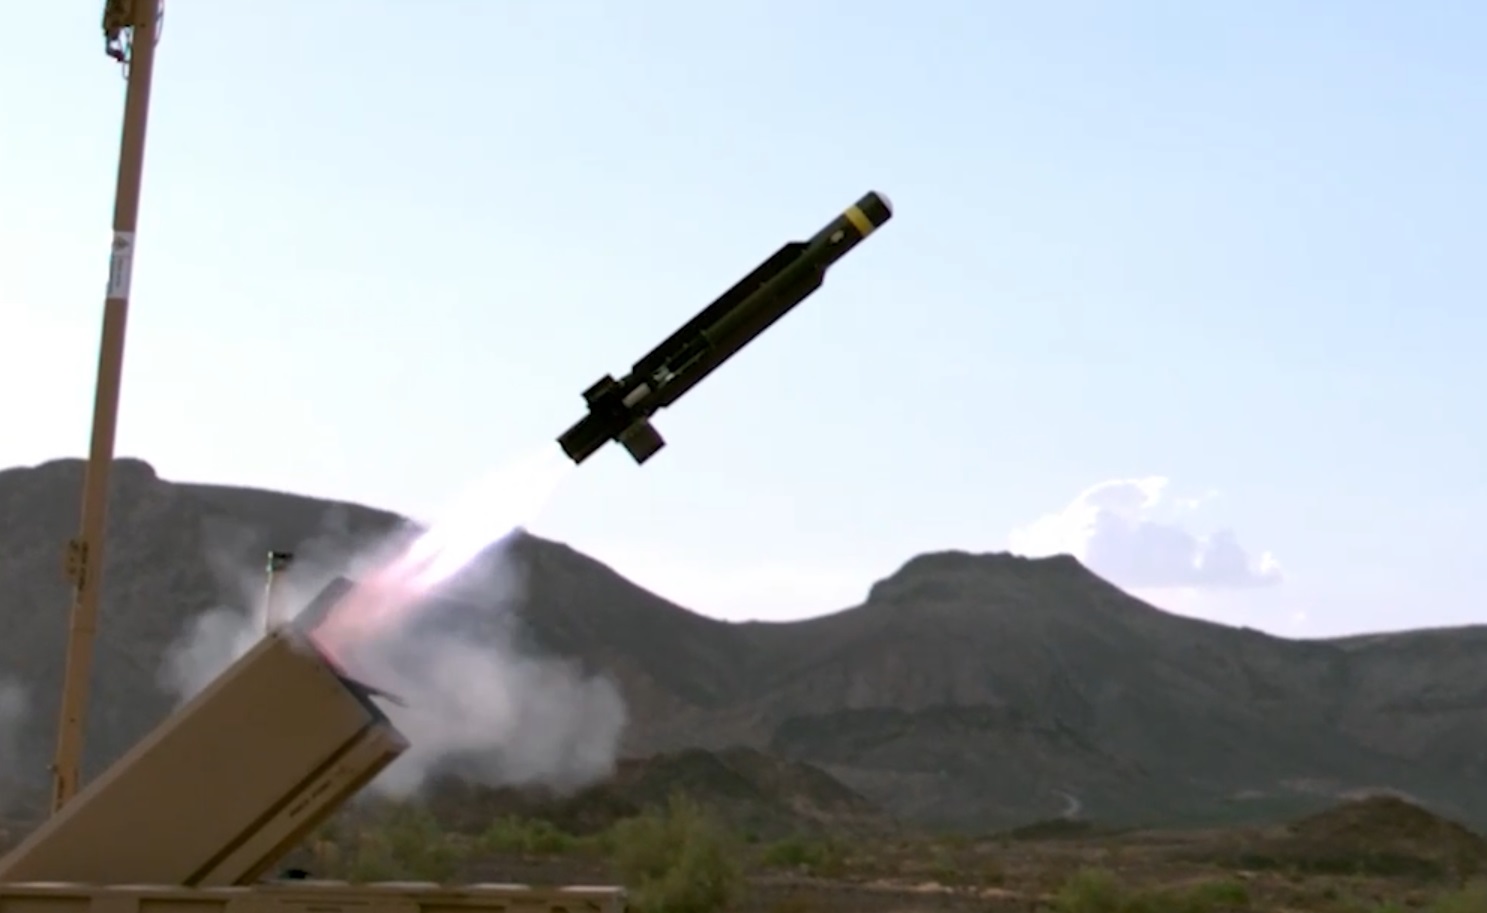 News  Raytheon's KuRFS and Coyote detect and defeat UAS targets